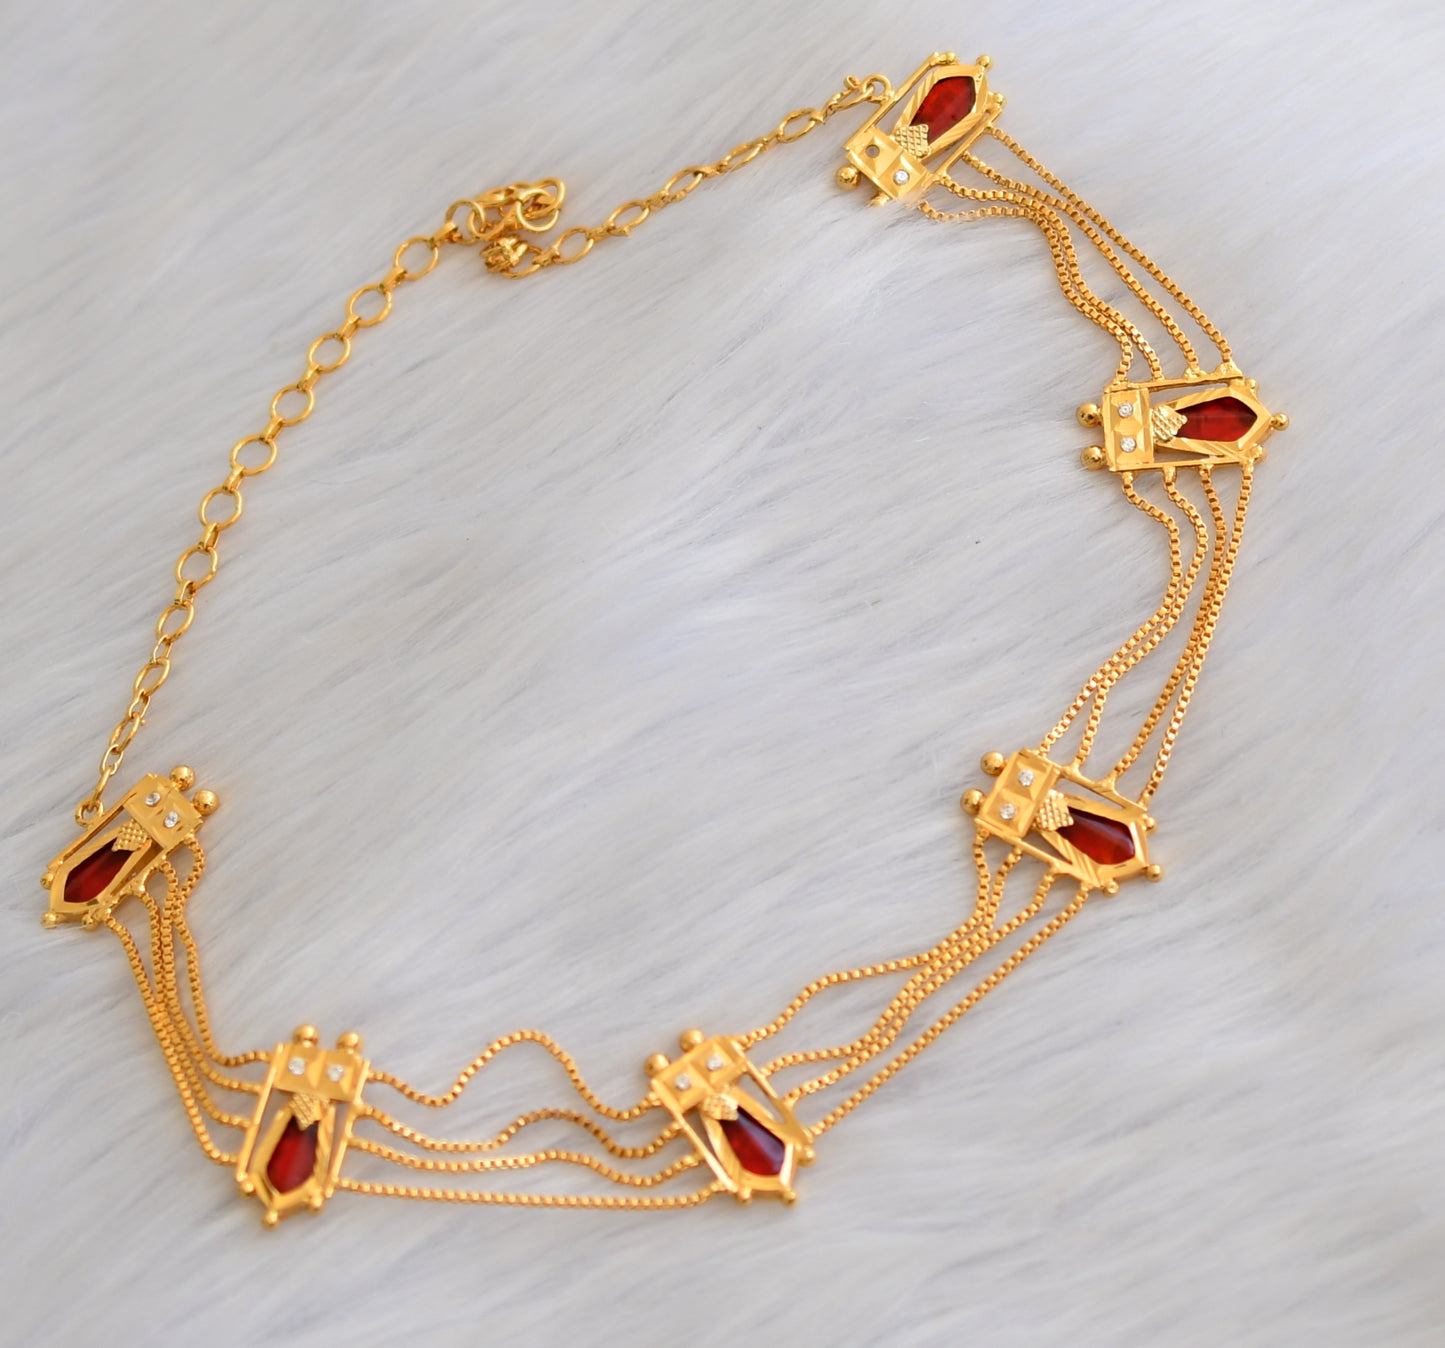 Gold tone white-red nagapadam kerala style choker/necklace dj-40327